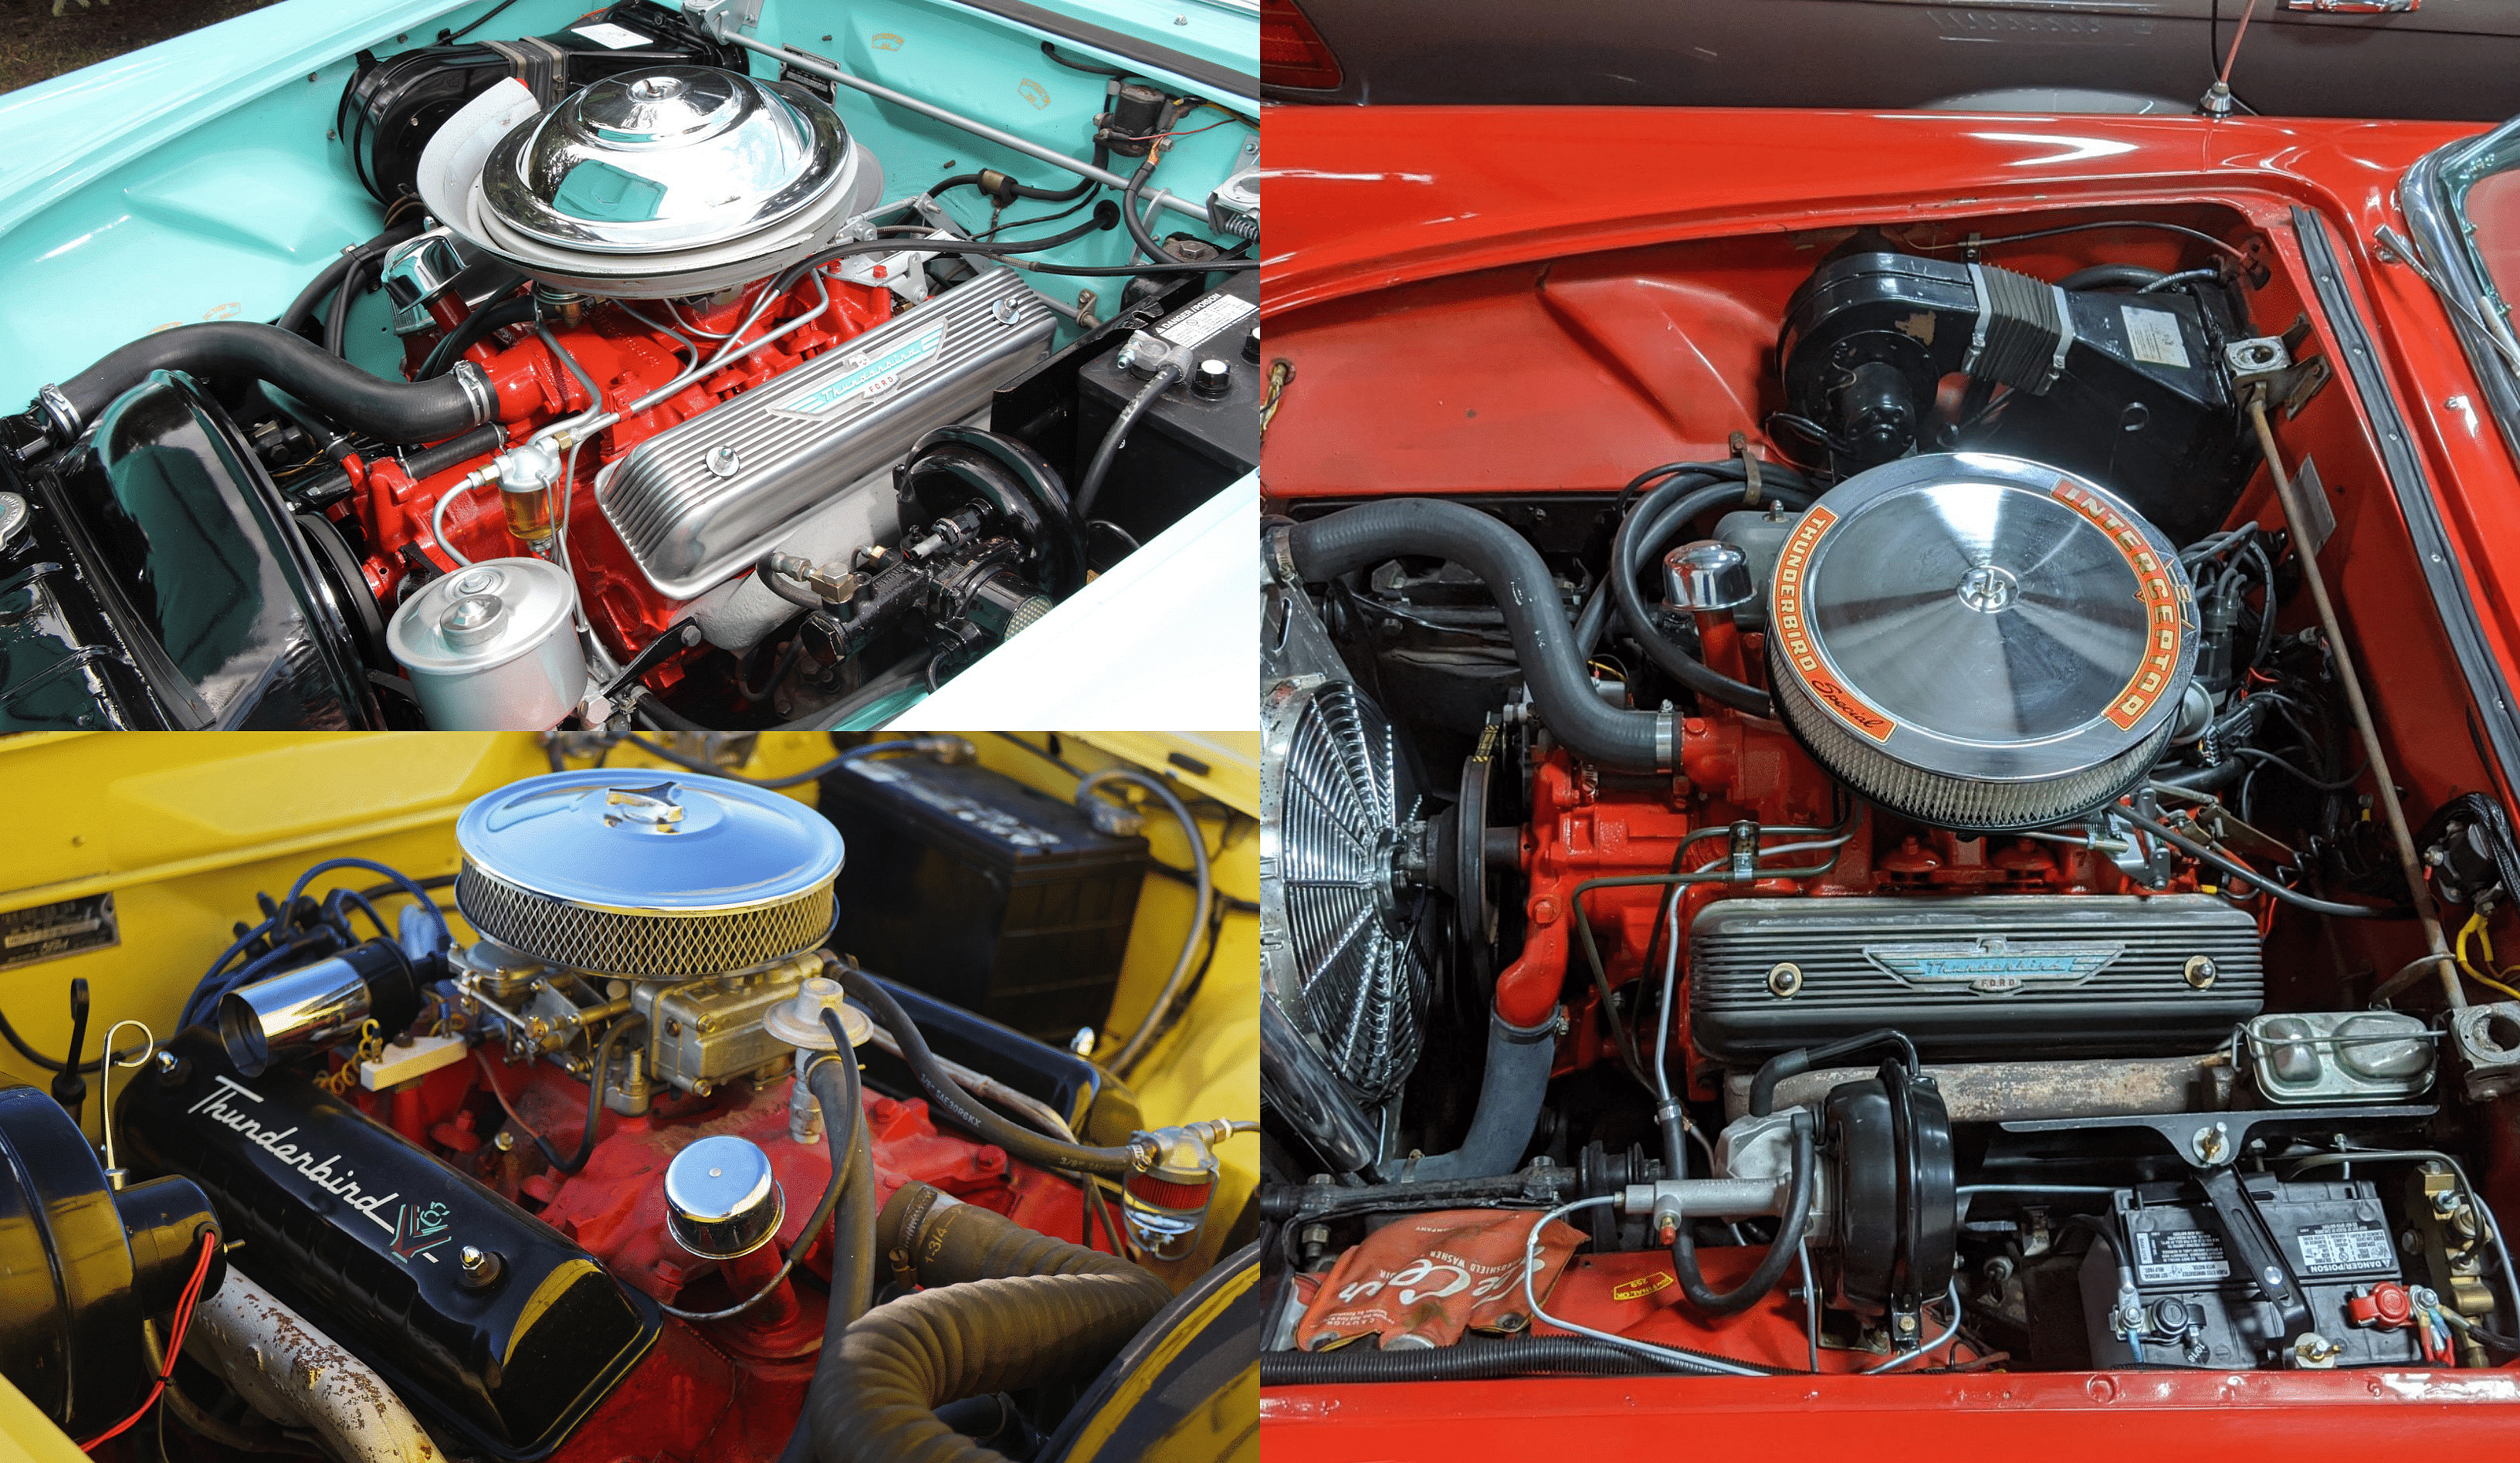 The Ford Thunderbird's engine